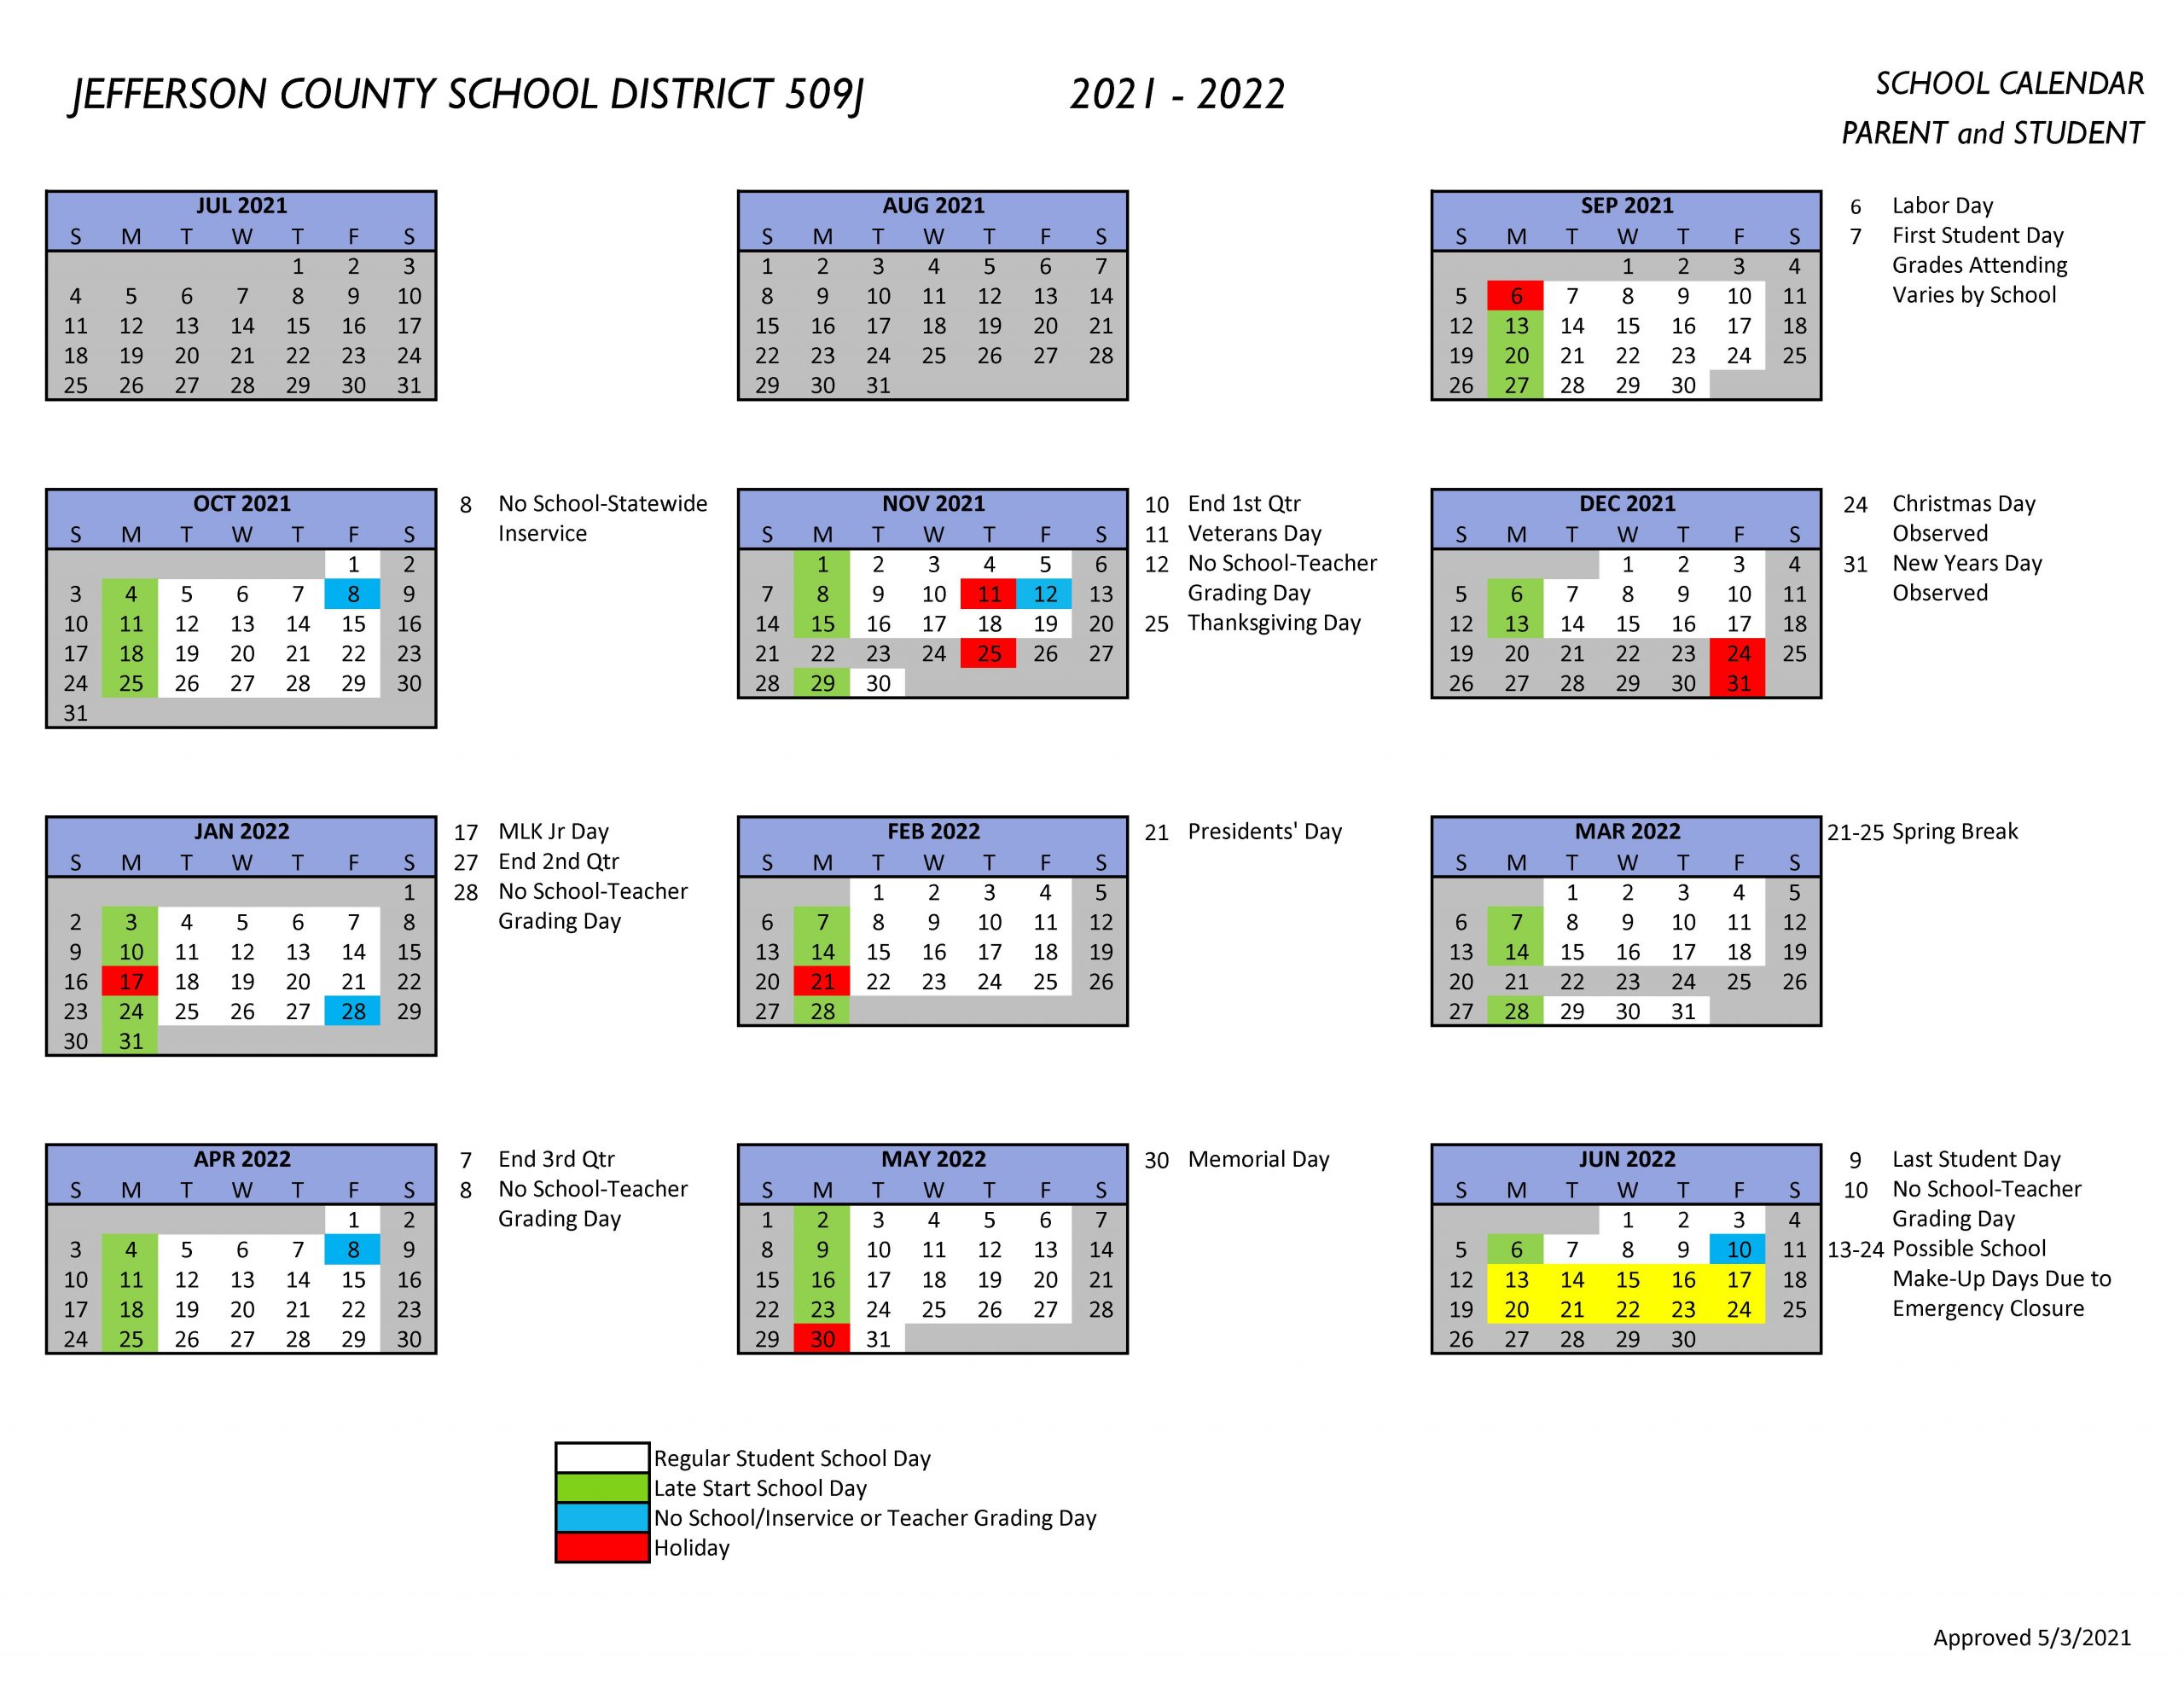 Jefferson County School Calendar 2022